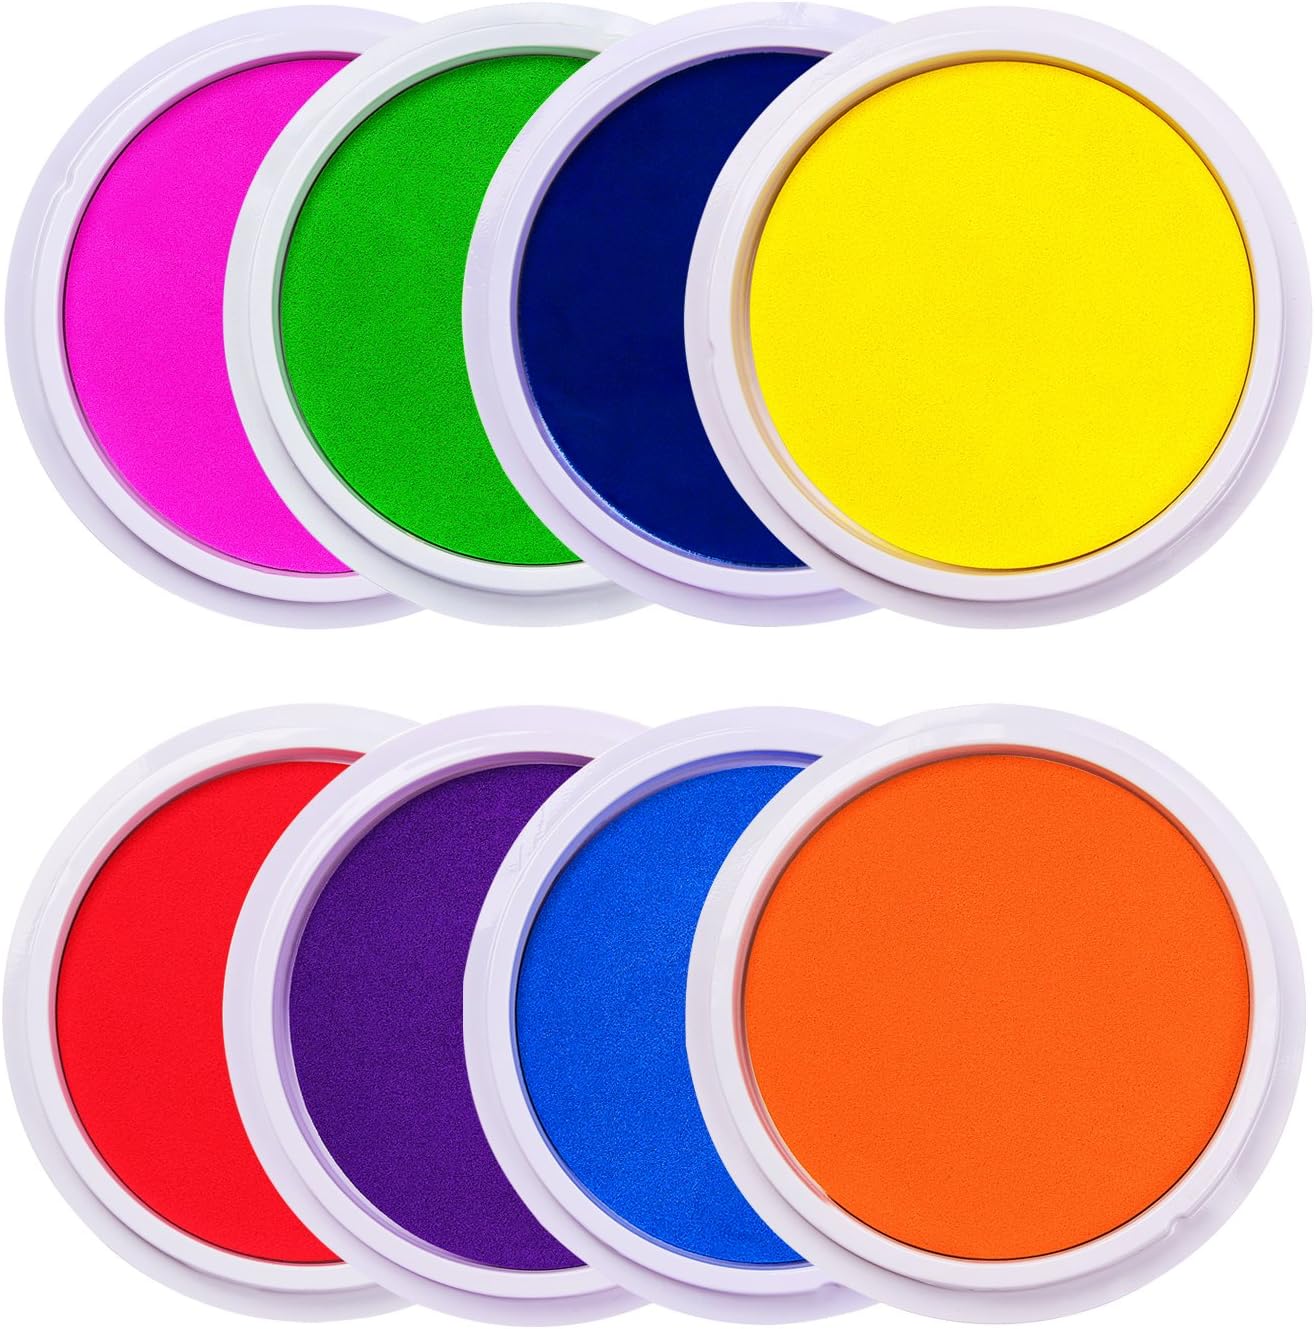 Craft Large Ink Pad Stamps Partner DIY Color,8 Colors Rainbow Finger Ink pad for Kids (Pack of 8)